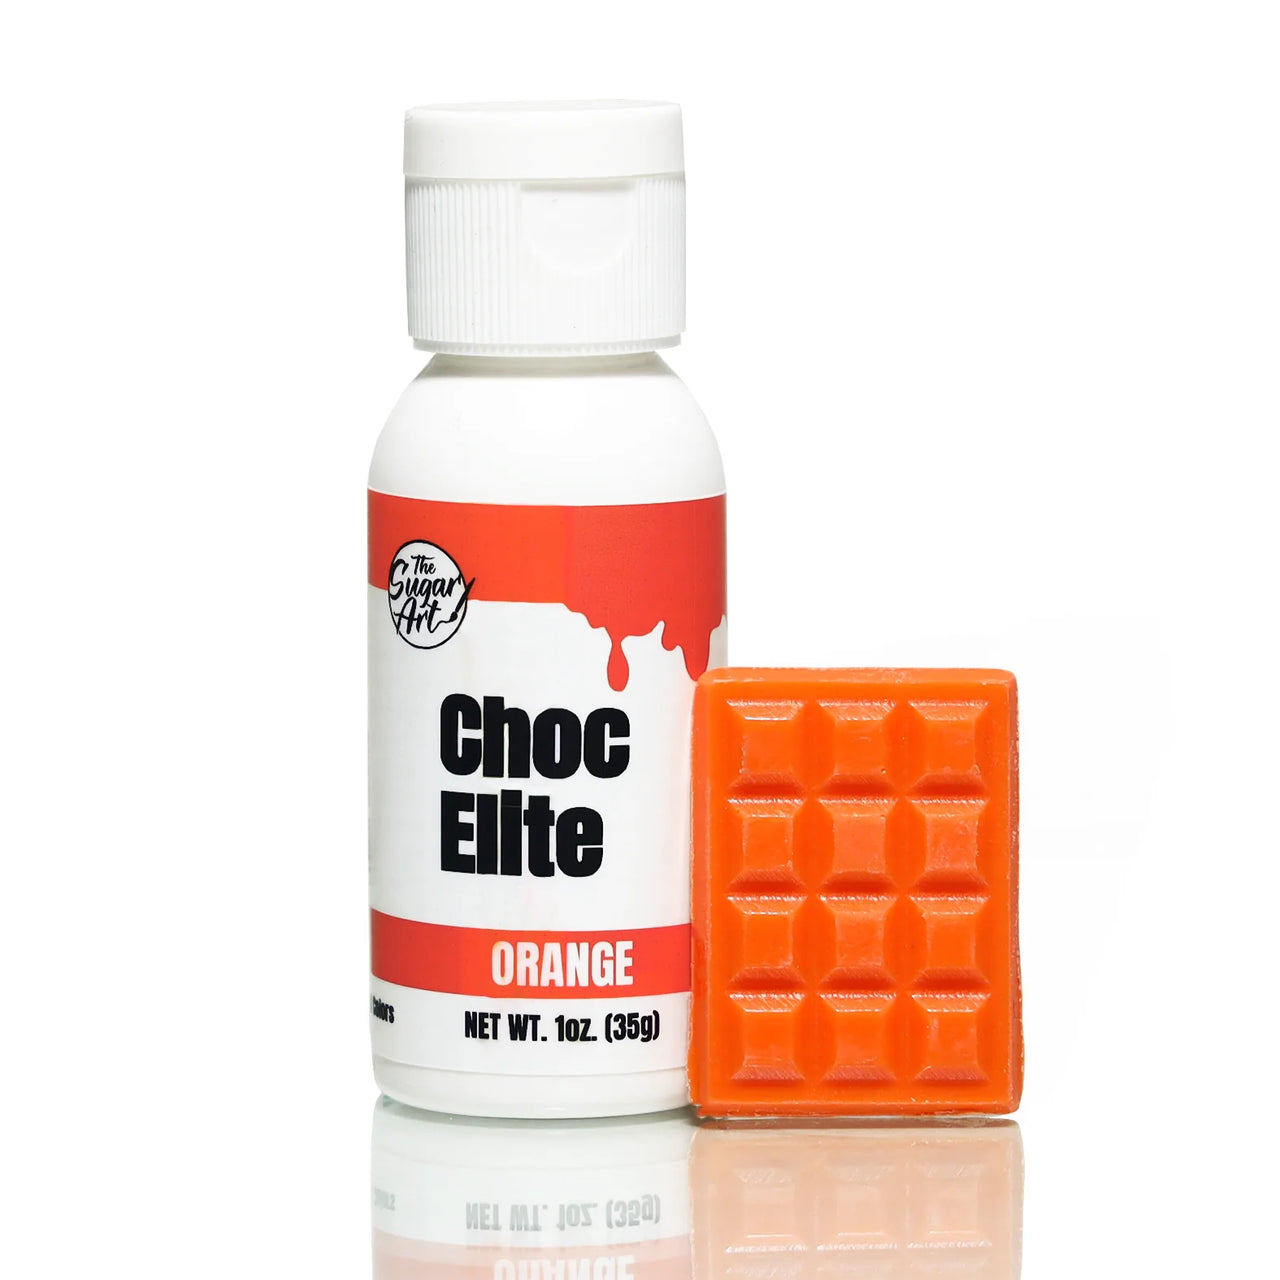 Orange Choc Elite 1oz (35g)